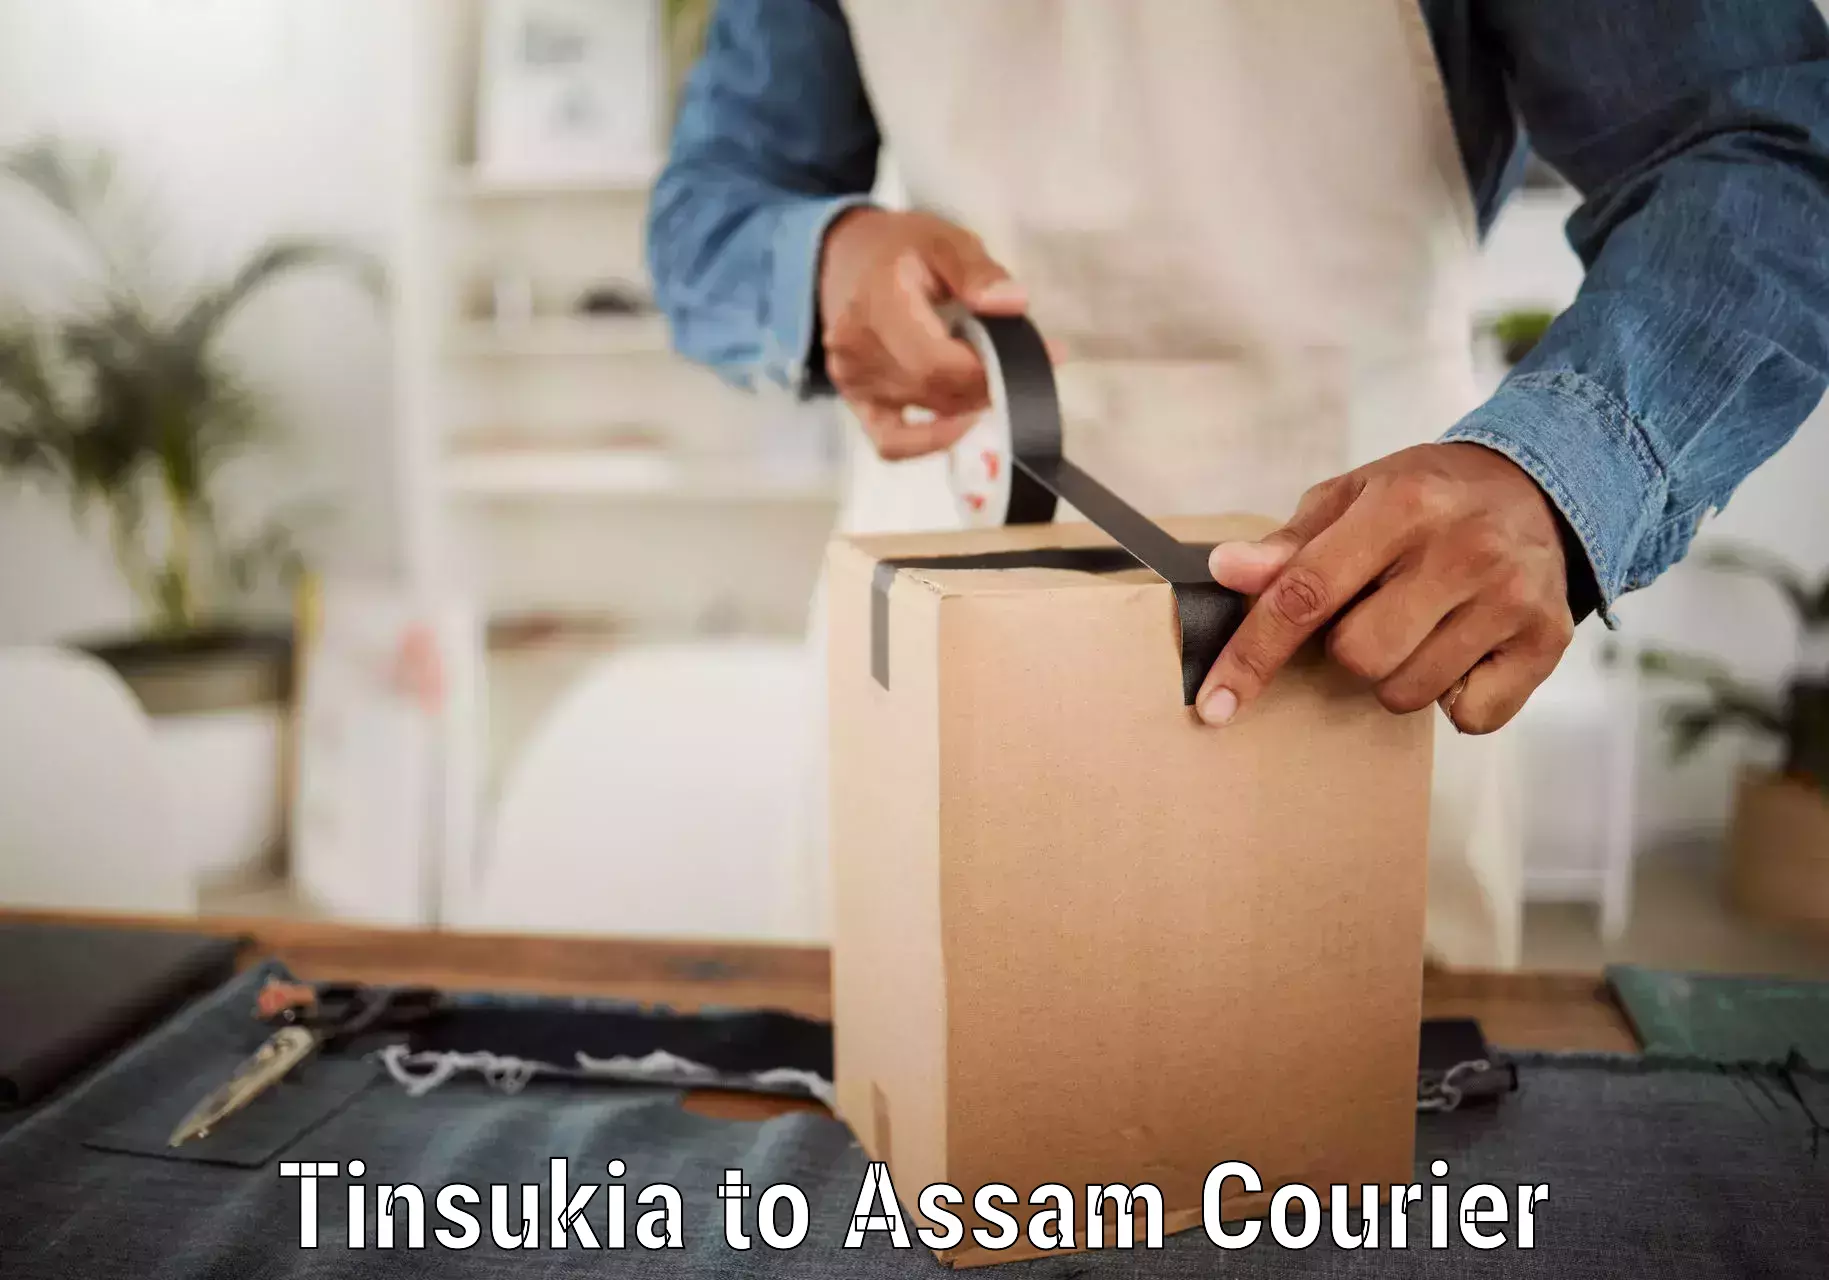 Doorstep delivery service Tinsukia to Titabor